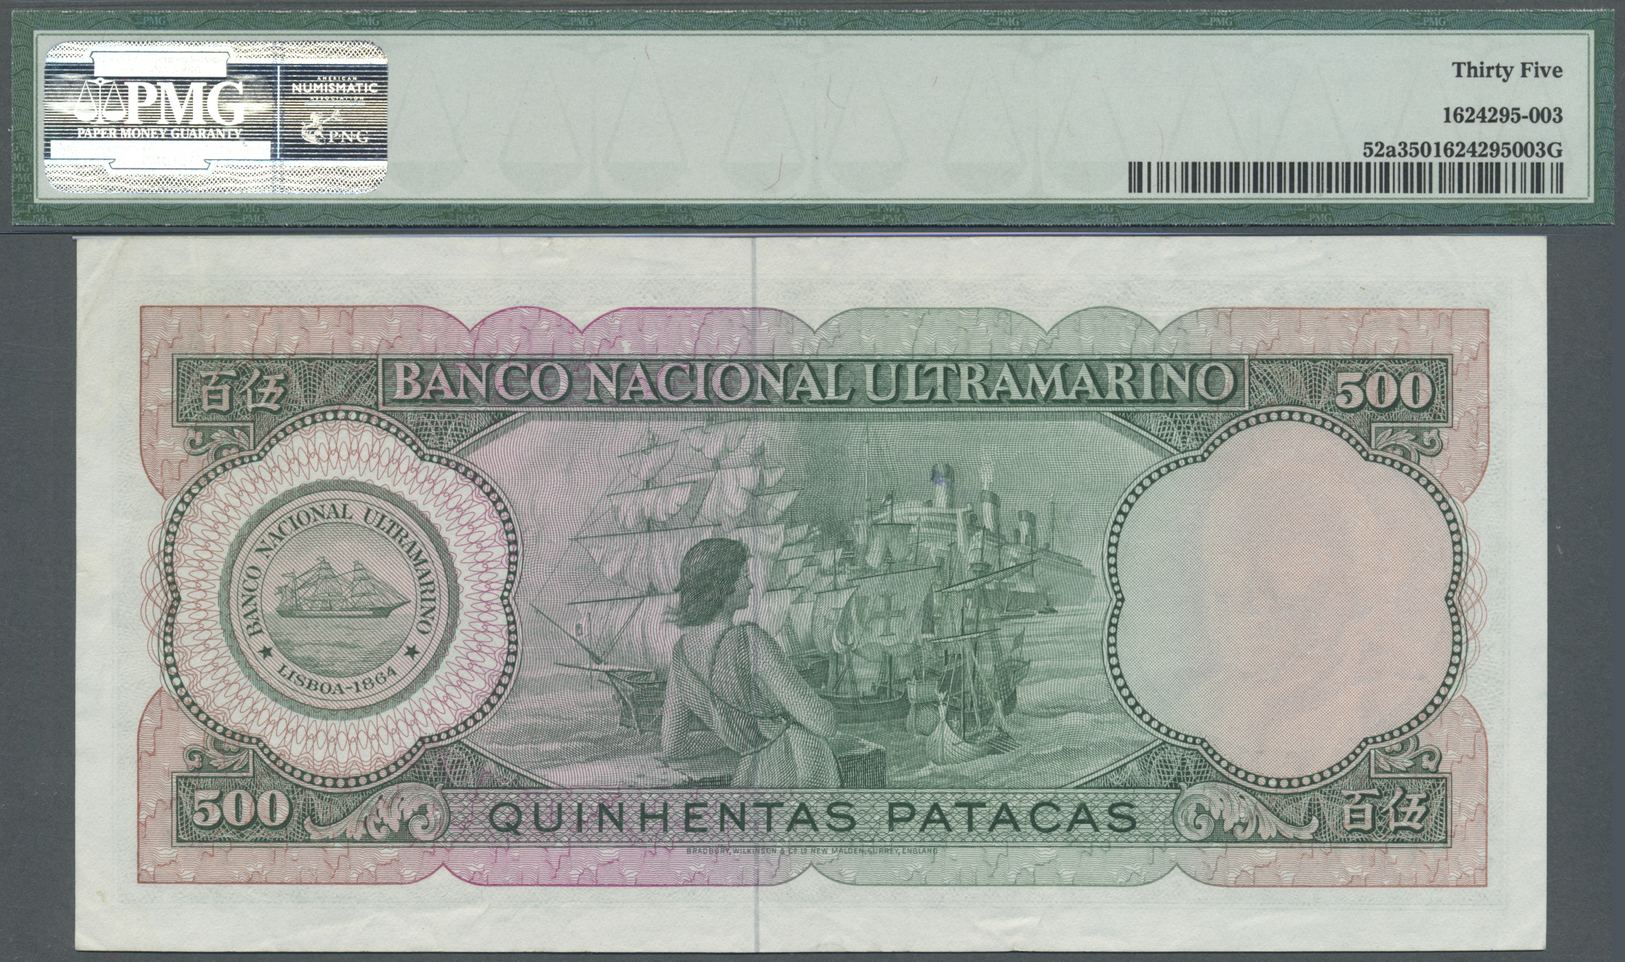 01601 Macau / Macao:  Banco Nacional Ultramarino 500 Patacas April 8th 1963, P.52a, Some Folds And Creases In The Paper - Macau